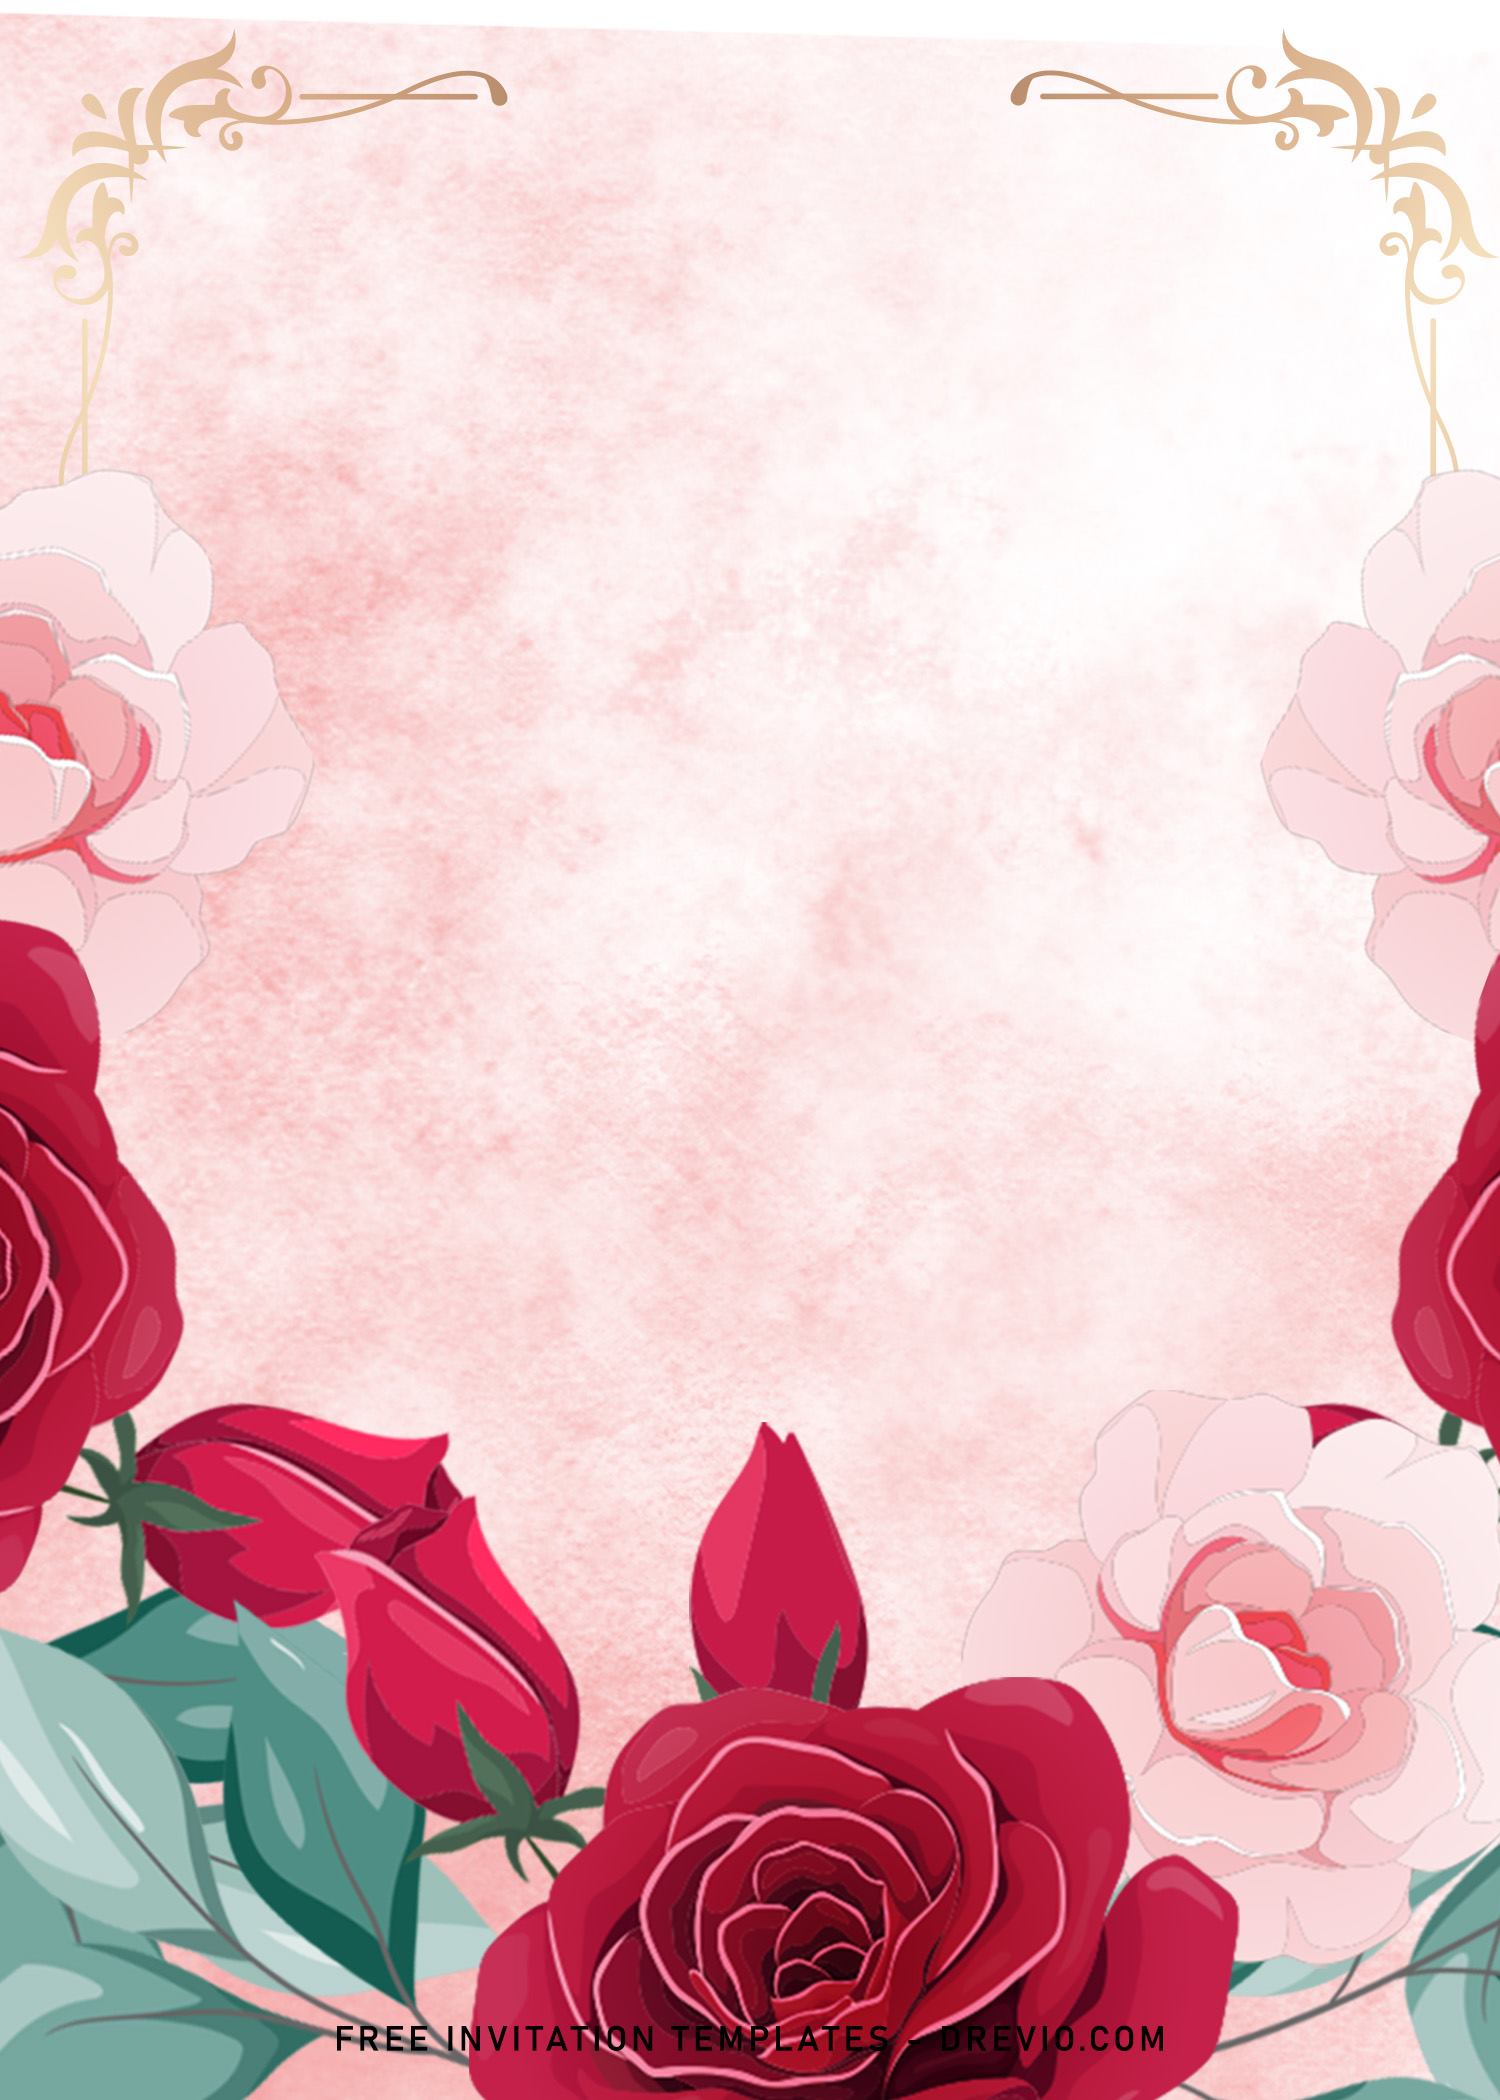 9-stunning-red-roses-wedding-invitation-templates-download-hundreds-free-printable-birthday